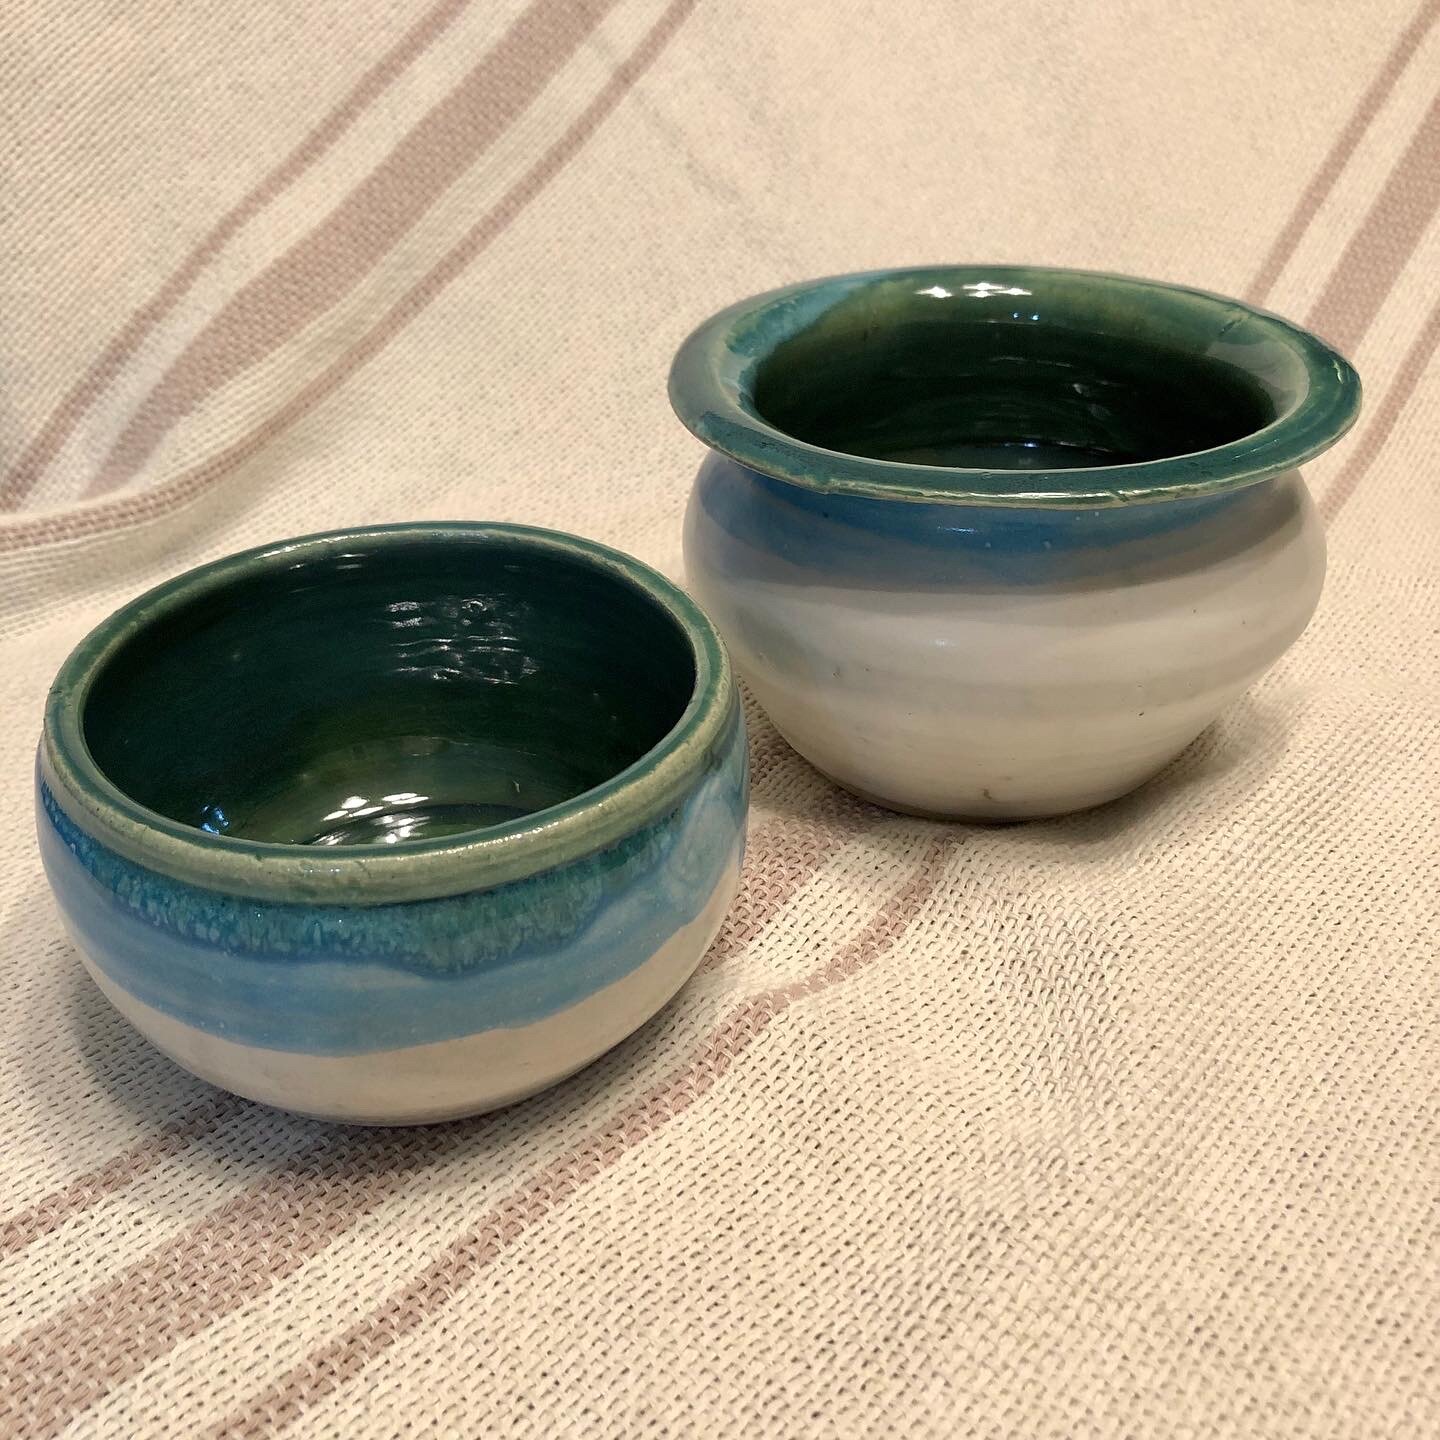 Finished bowls